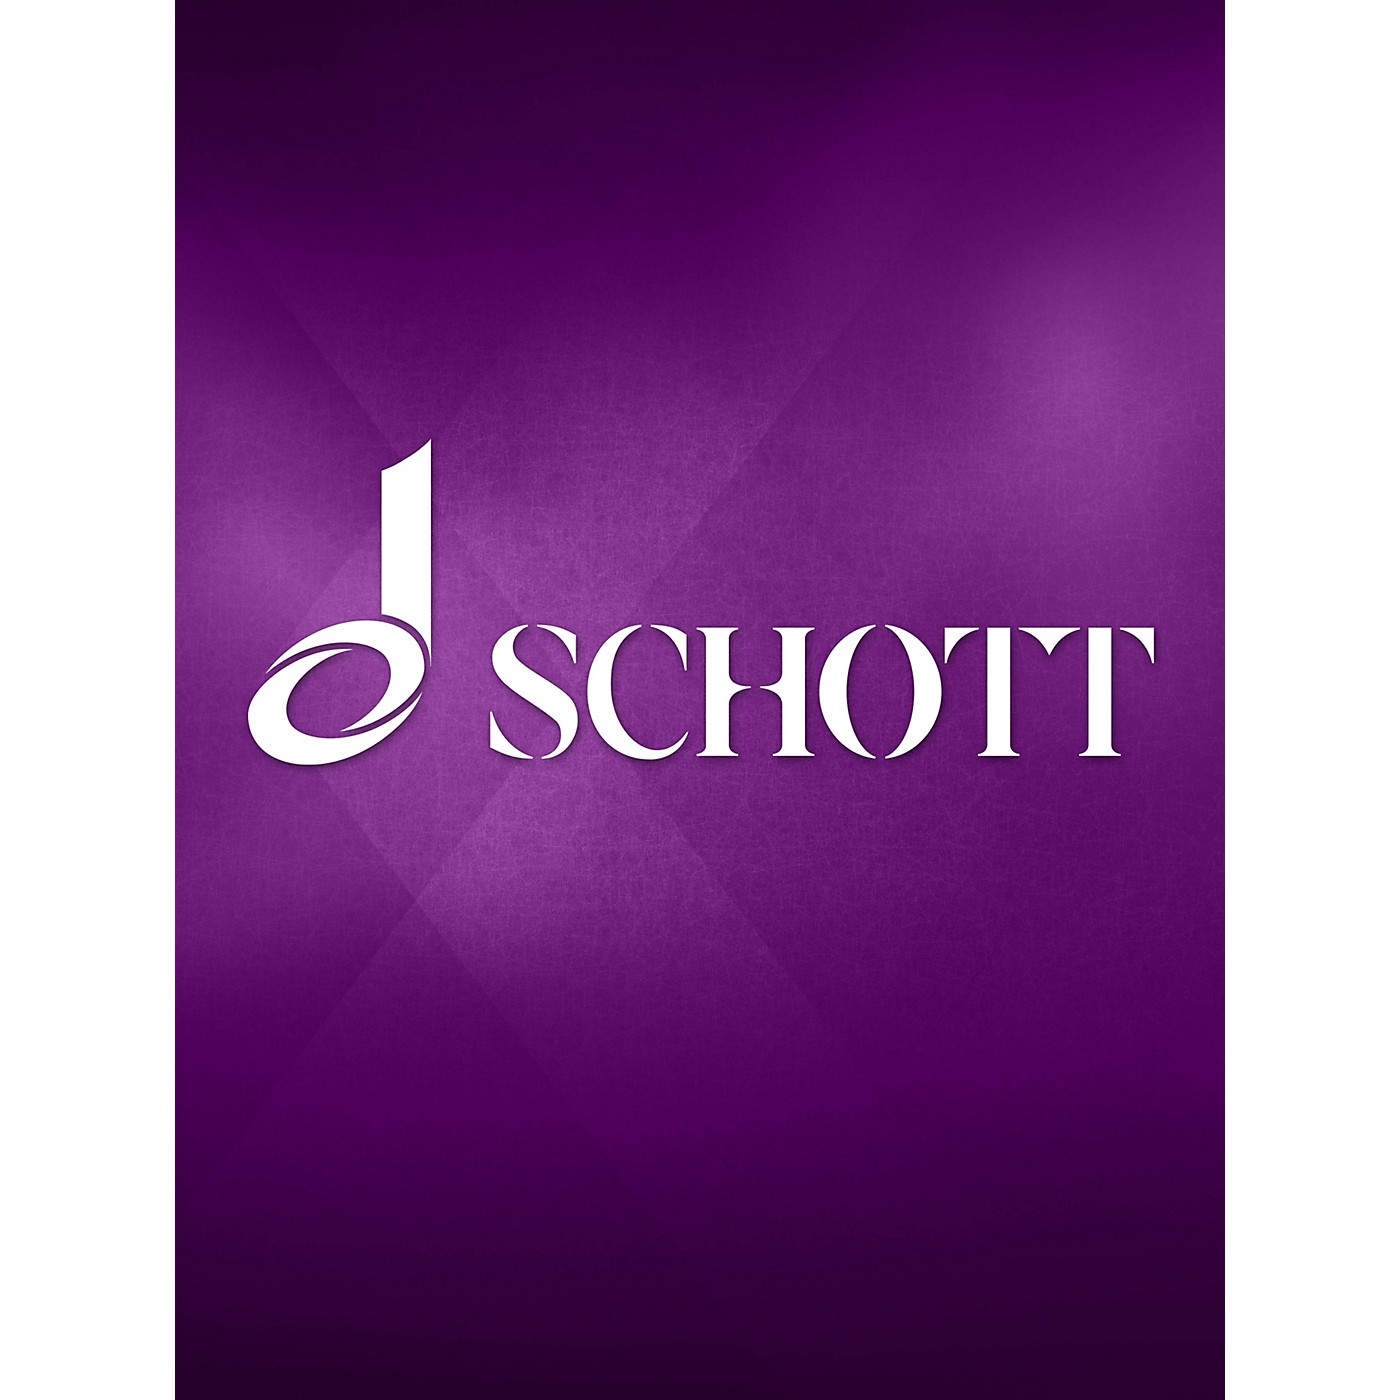 Schott Vortragsbuch für Harmonium (Harmonium Recitals) Schott Series thumbnail